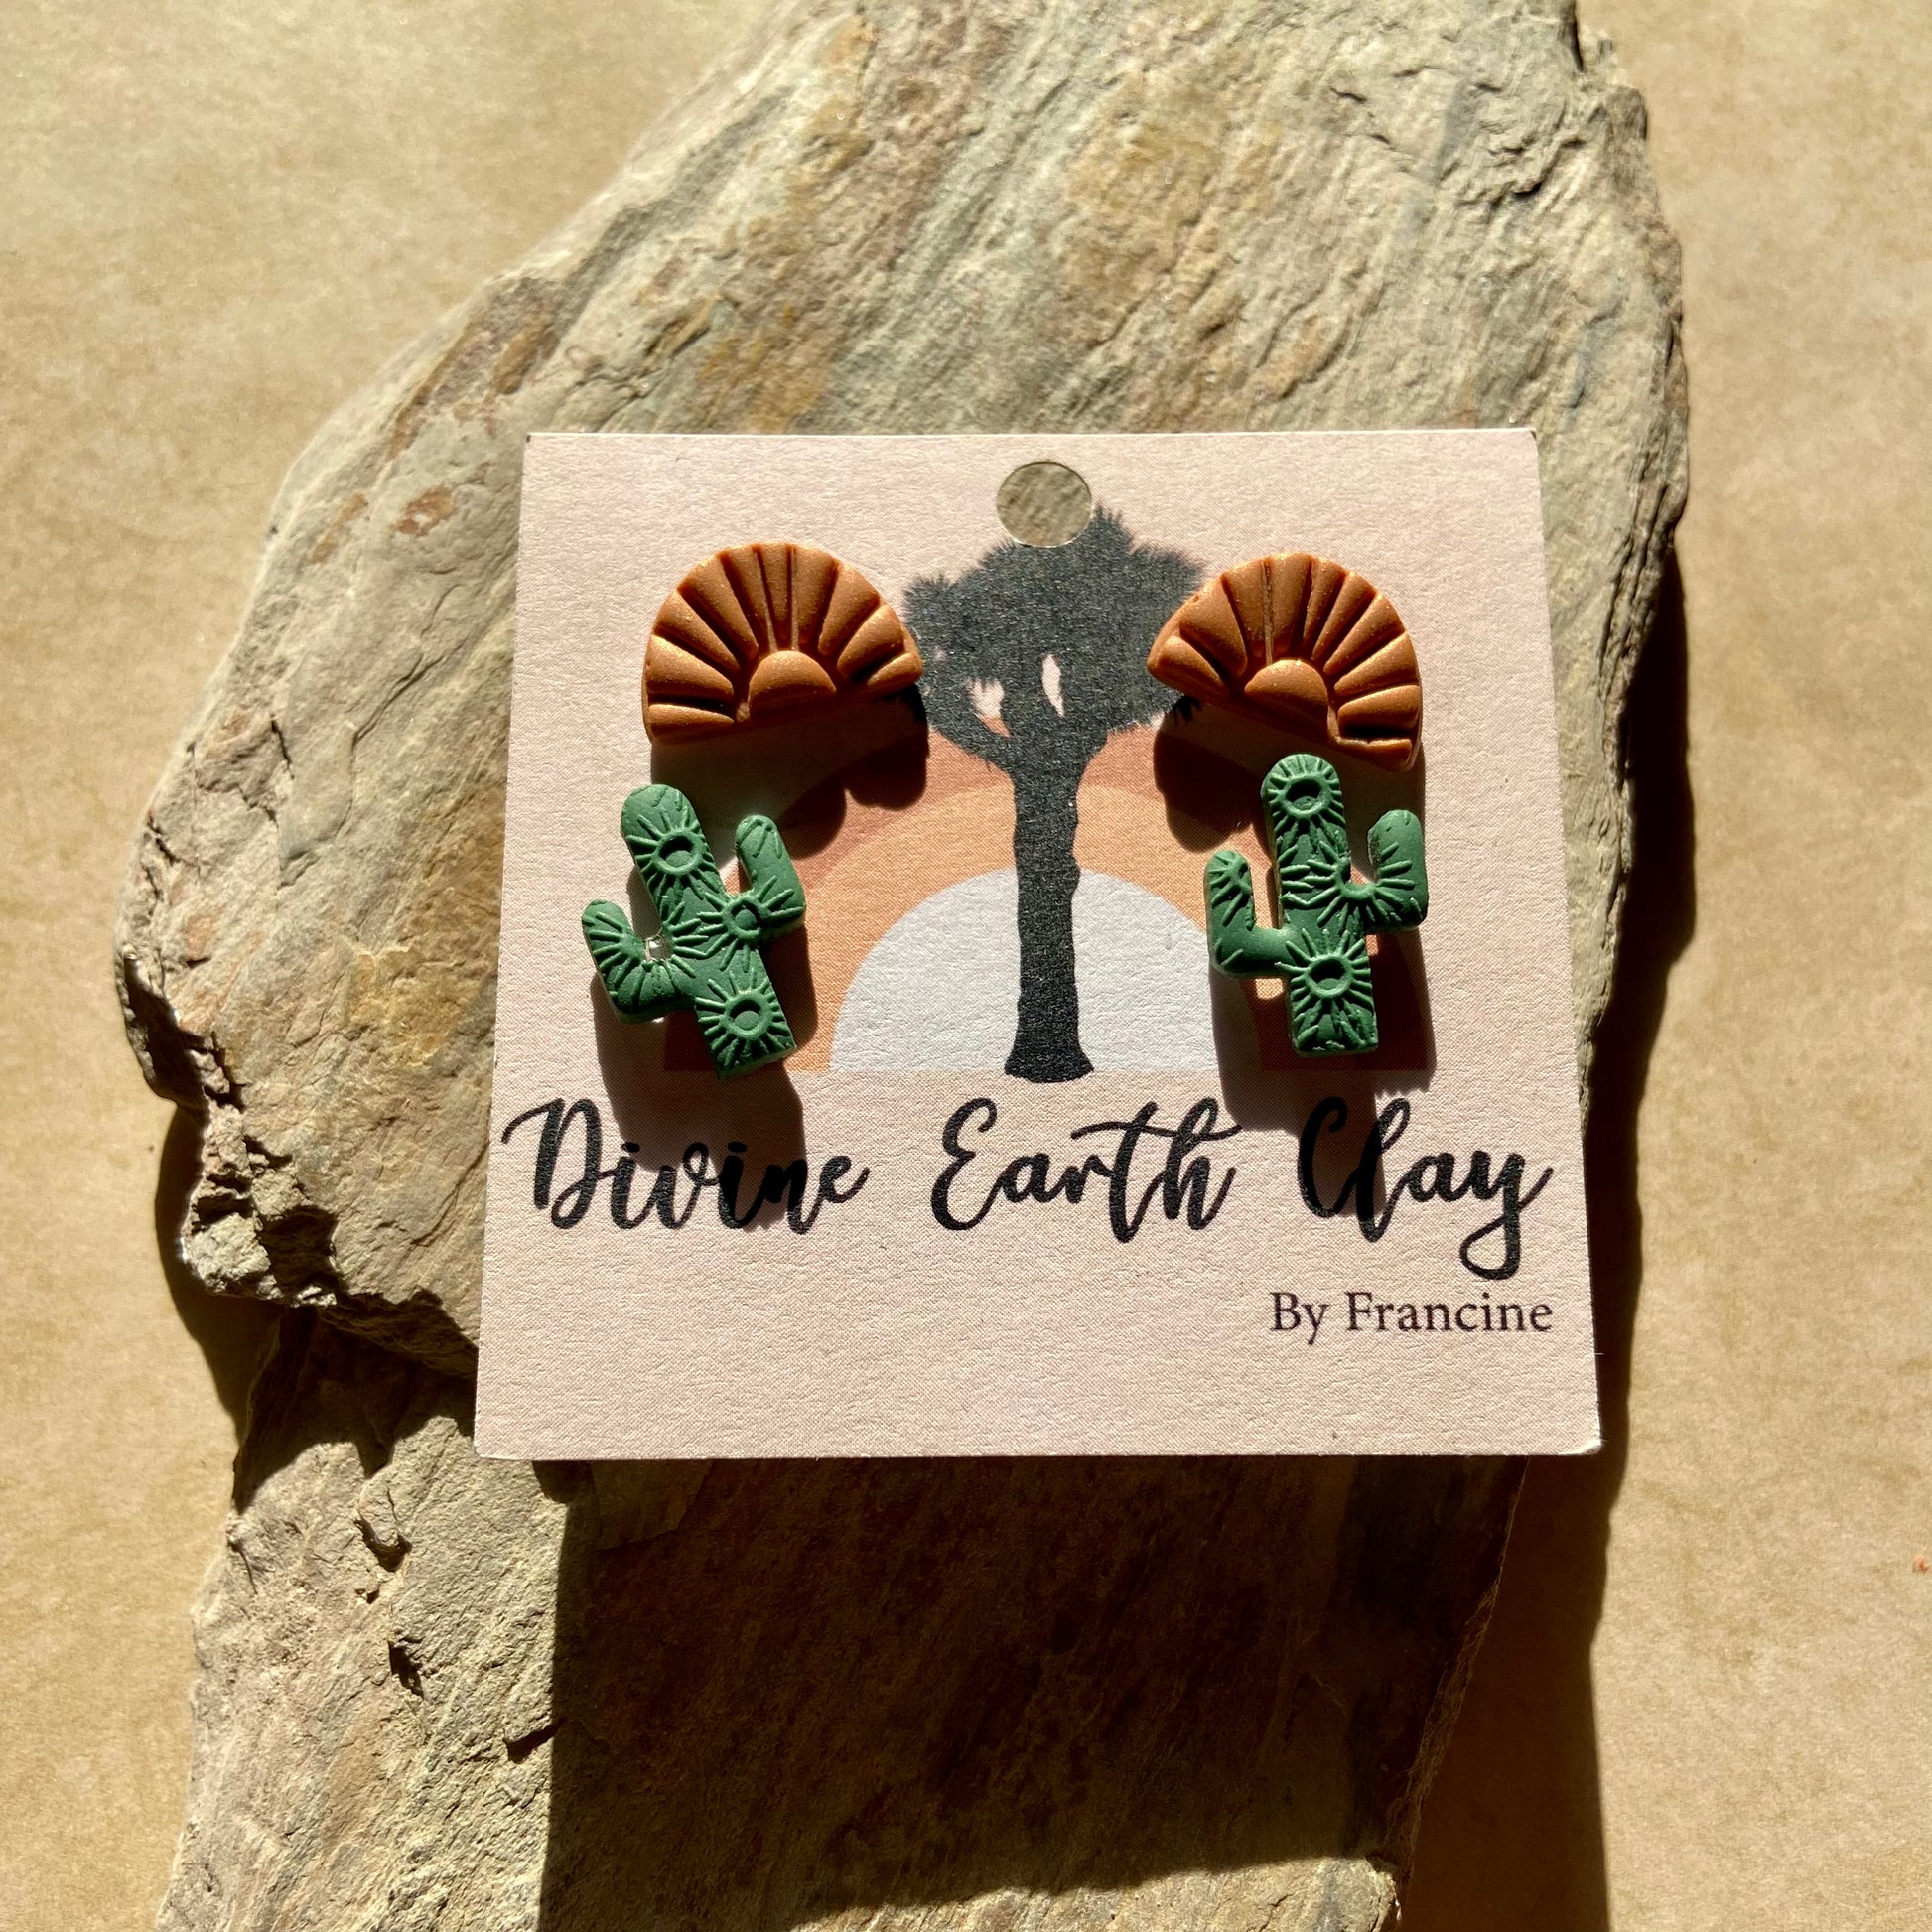 DivineEarthClay Desert Stud Pack (sunset/cactus) $12